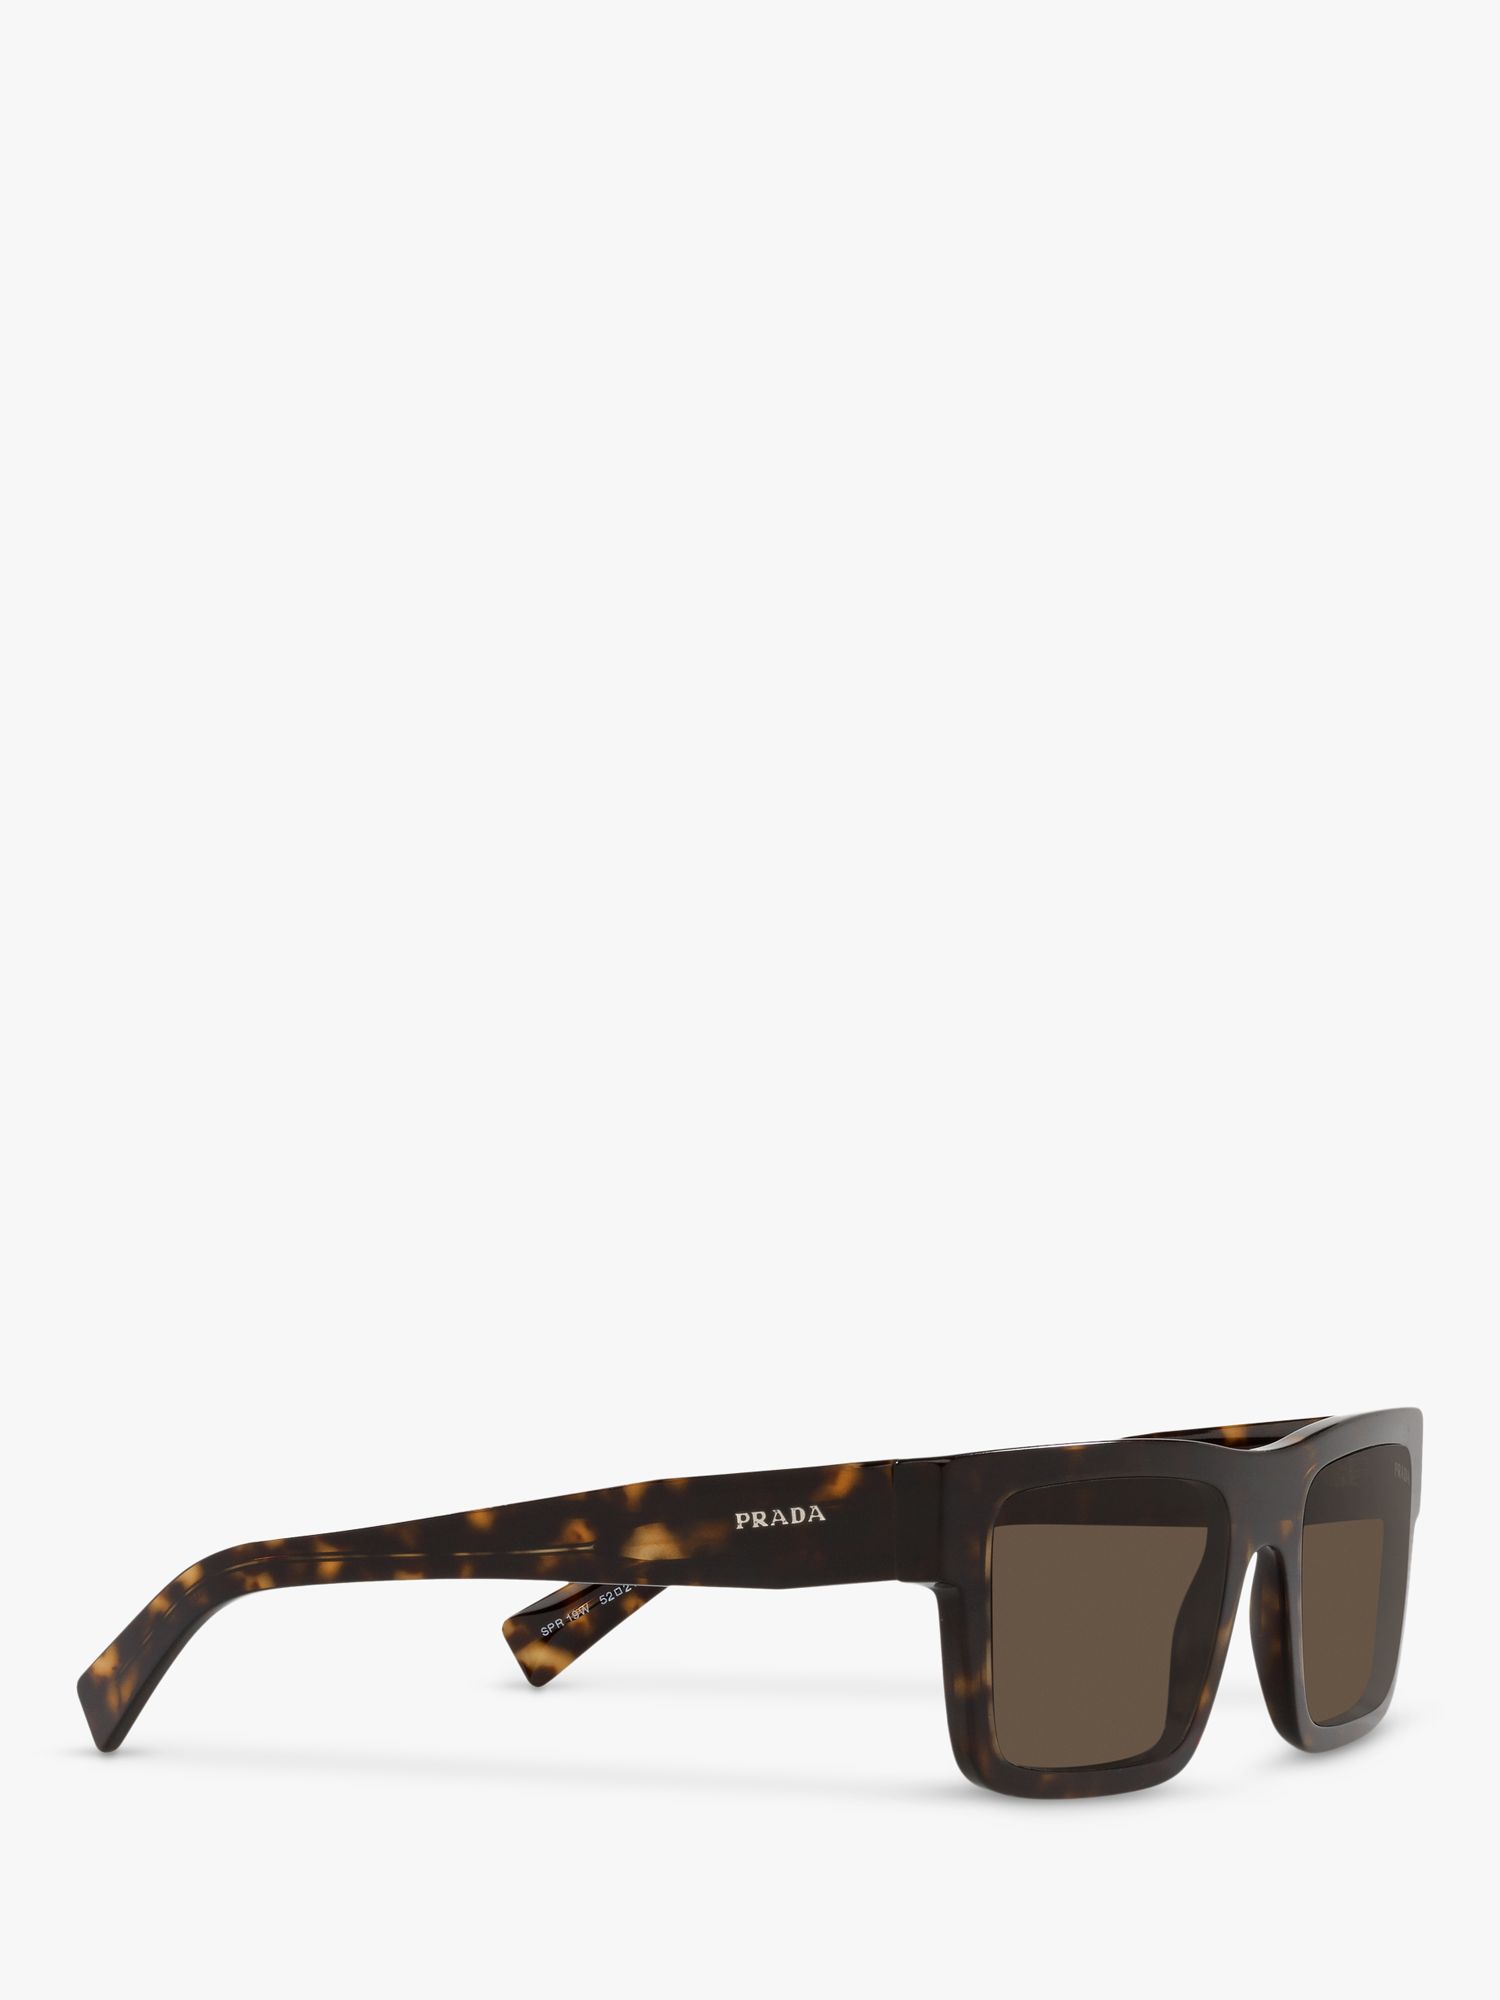 Buy Prada PR 19WS Men's Tortoiseshell Square Sunglasses, Brown Online at johnlewis.com